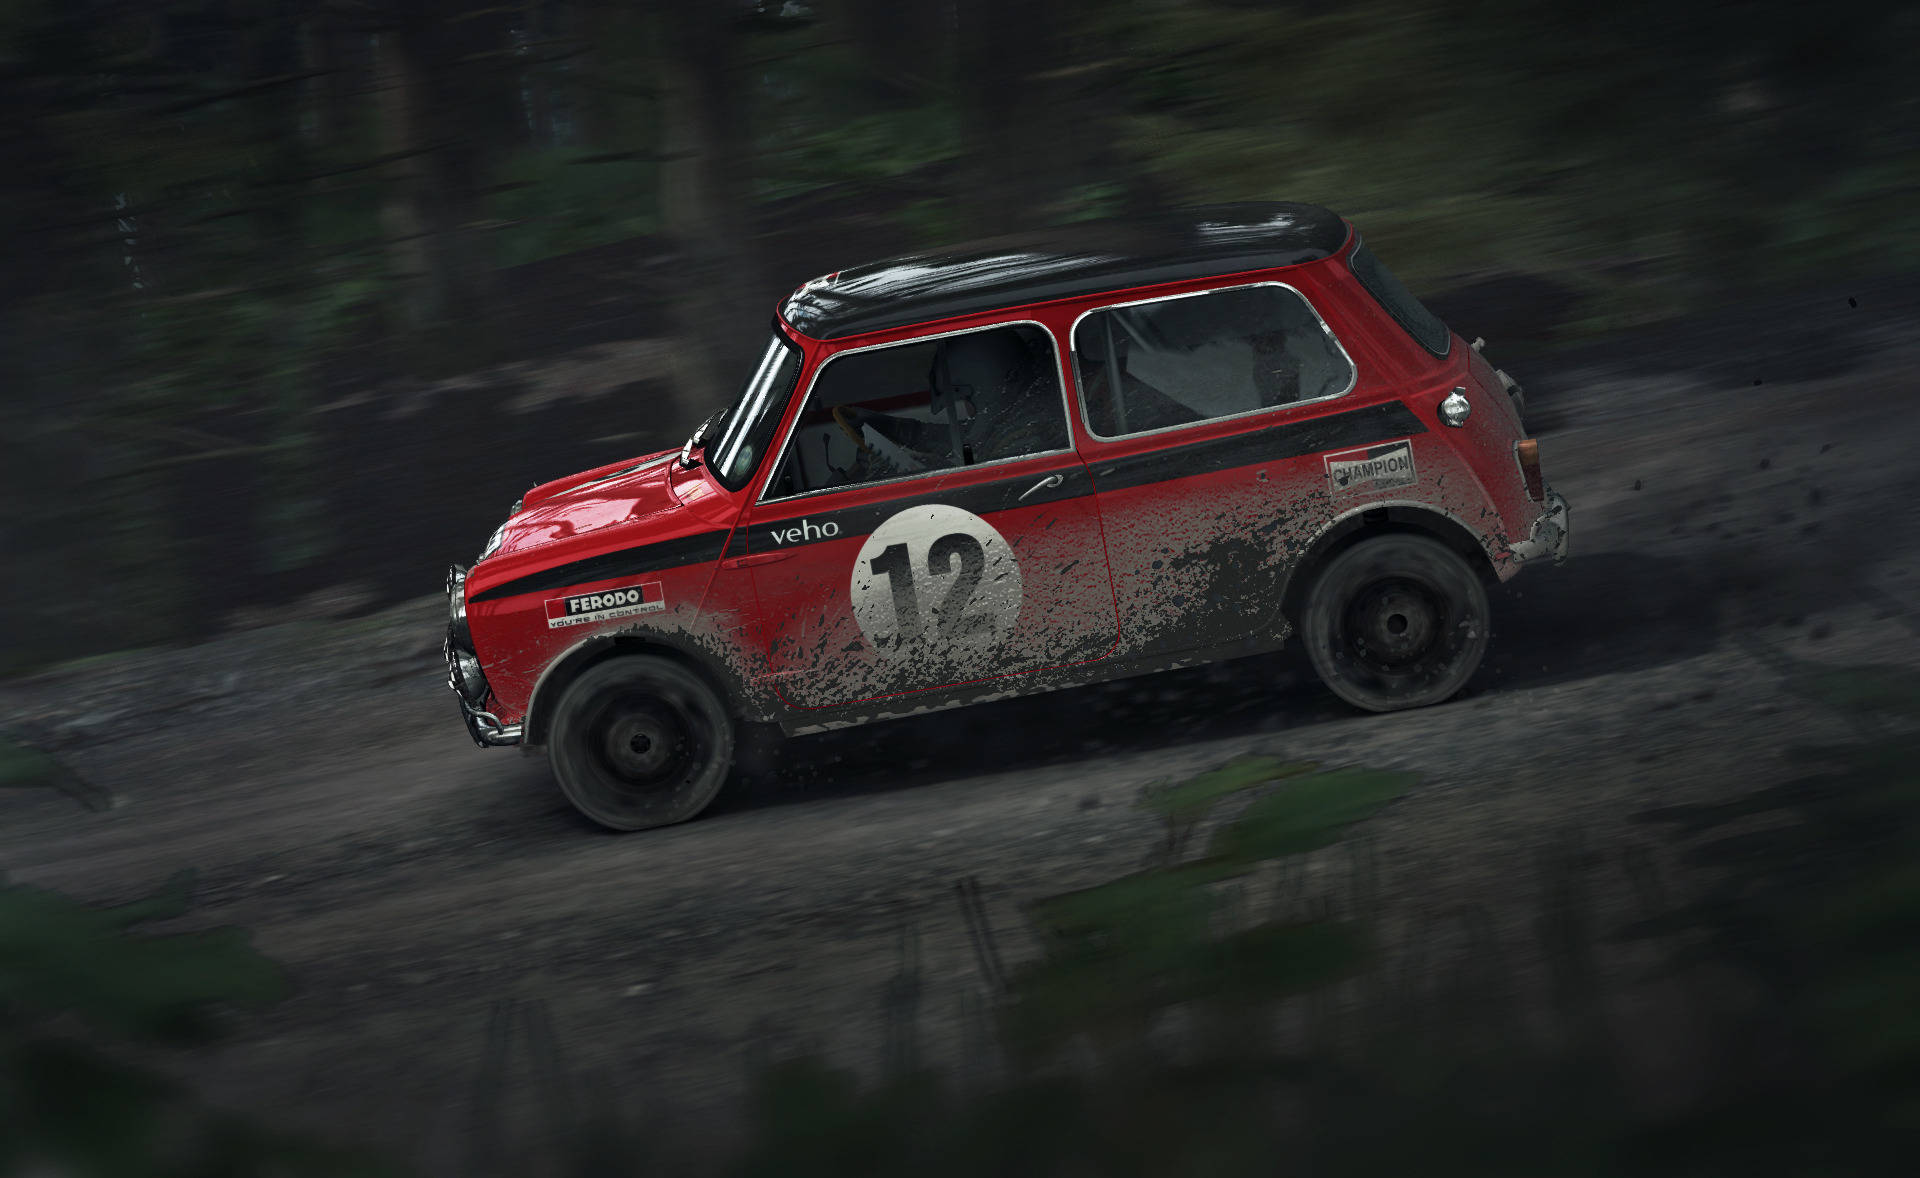 Adrenaline Rush with Dirt Rally Car Racing Wallpaper